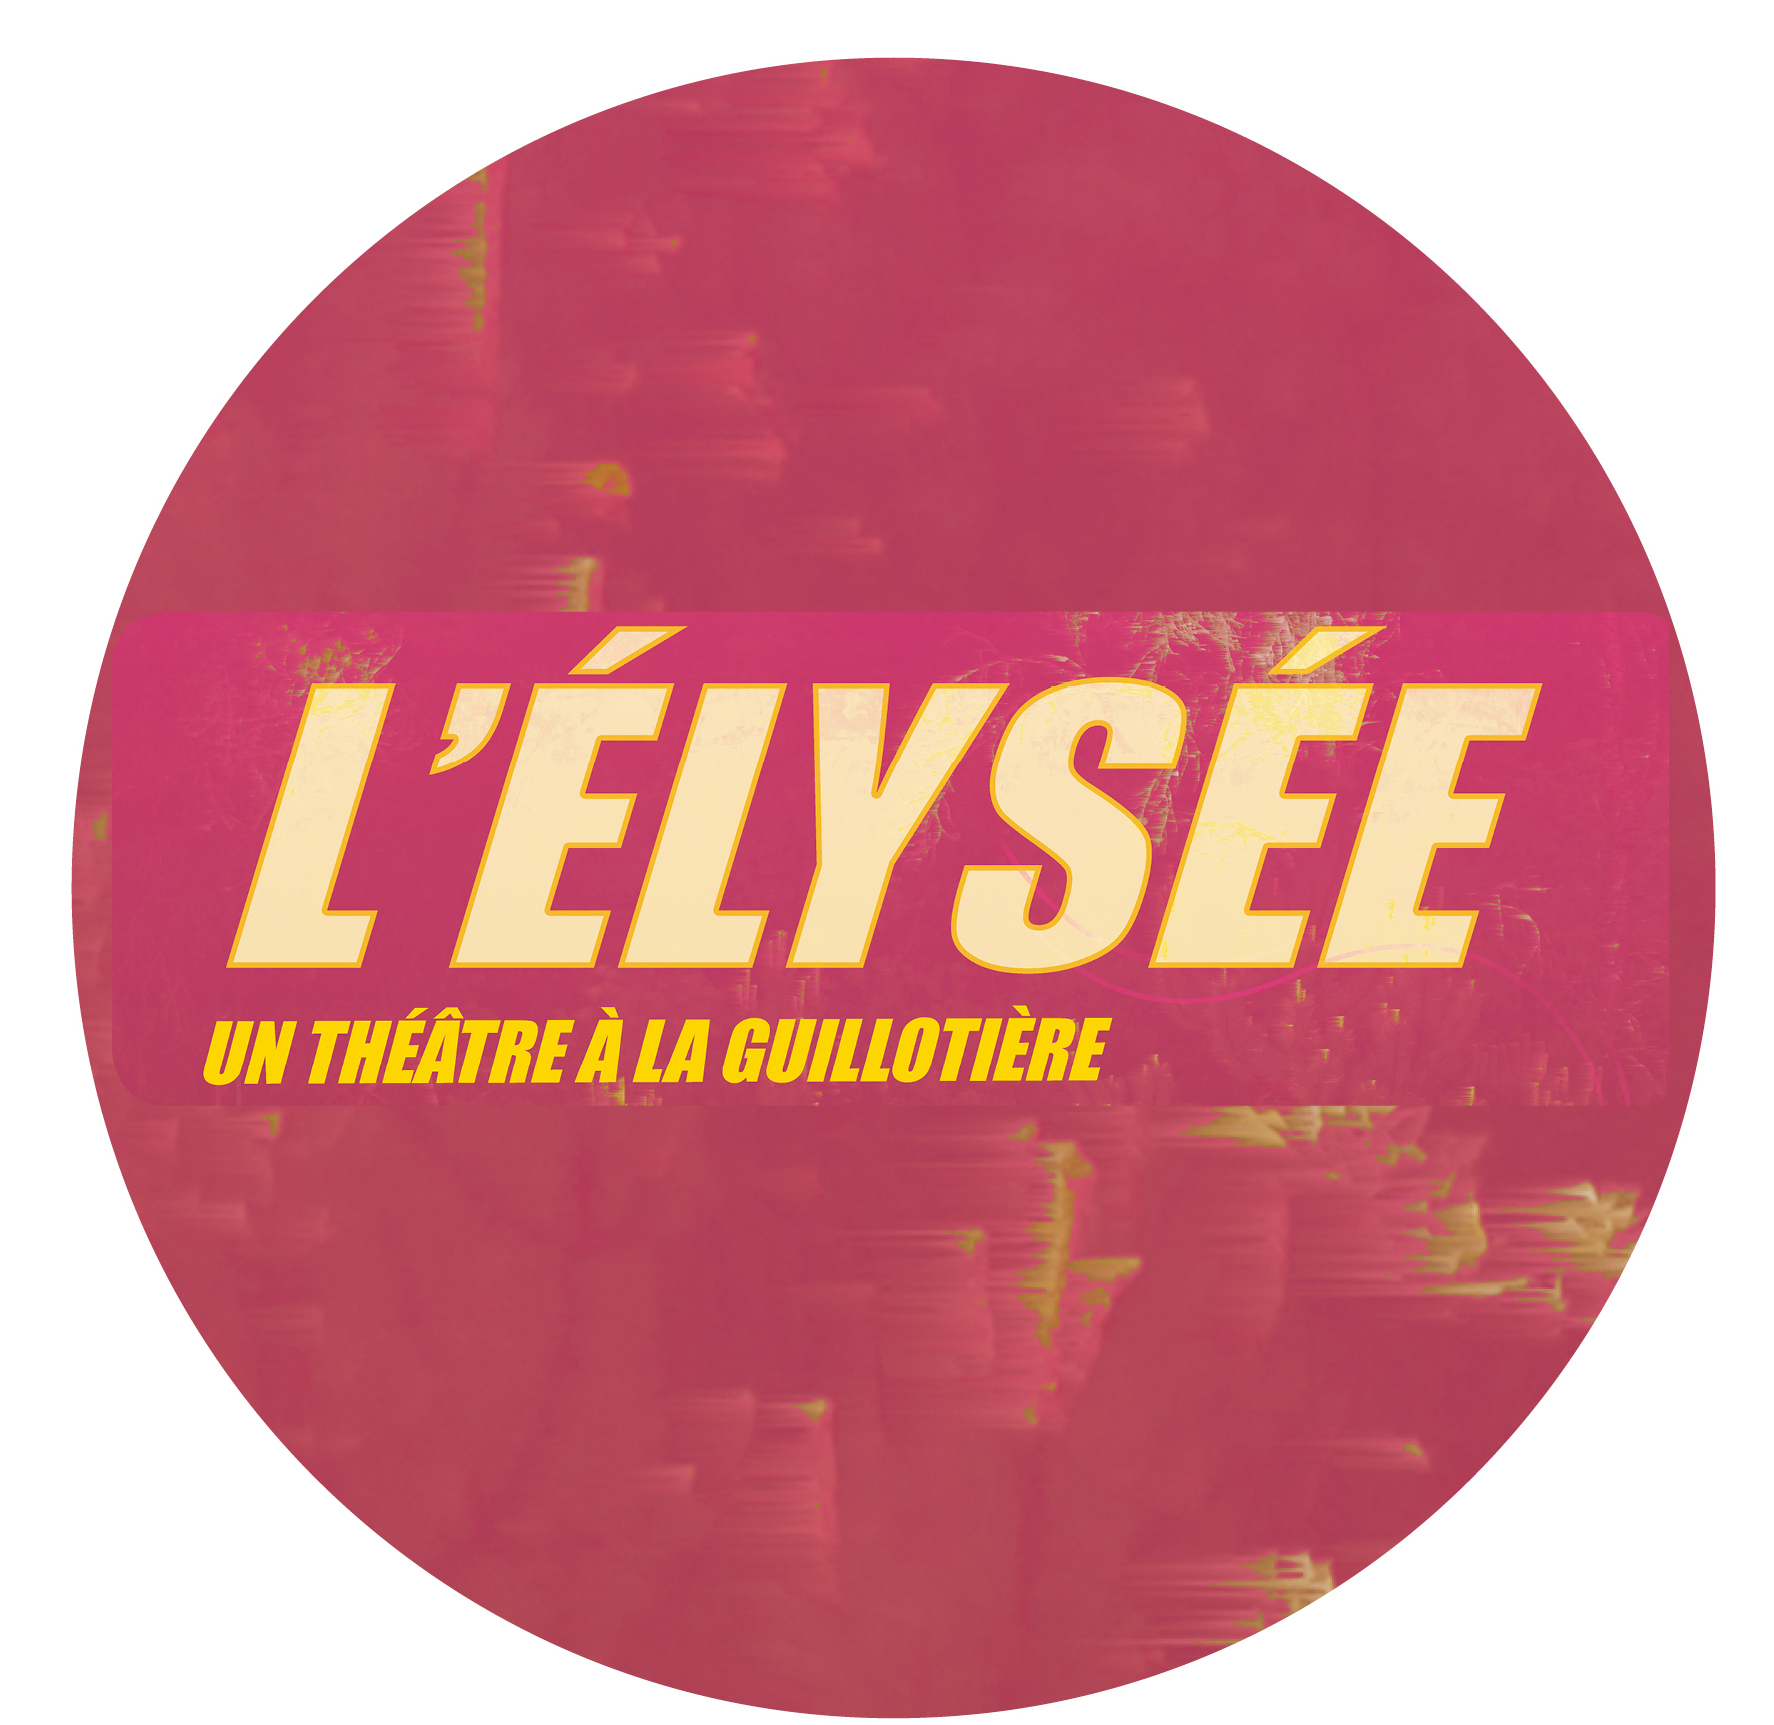 Théâtre de l'Elysée - LYON